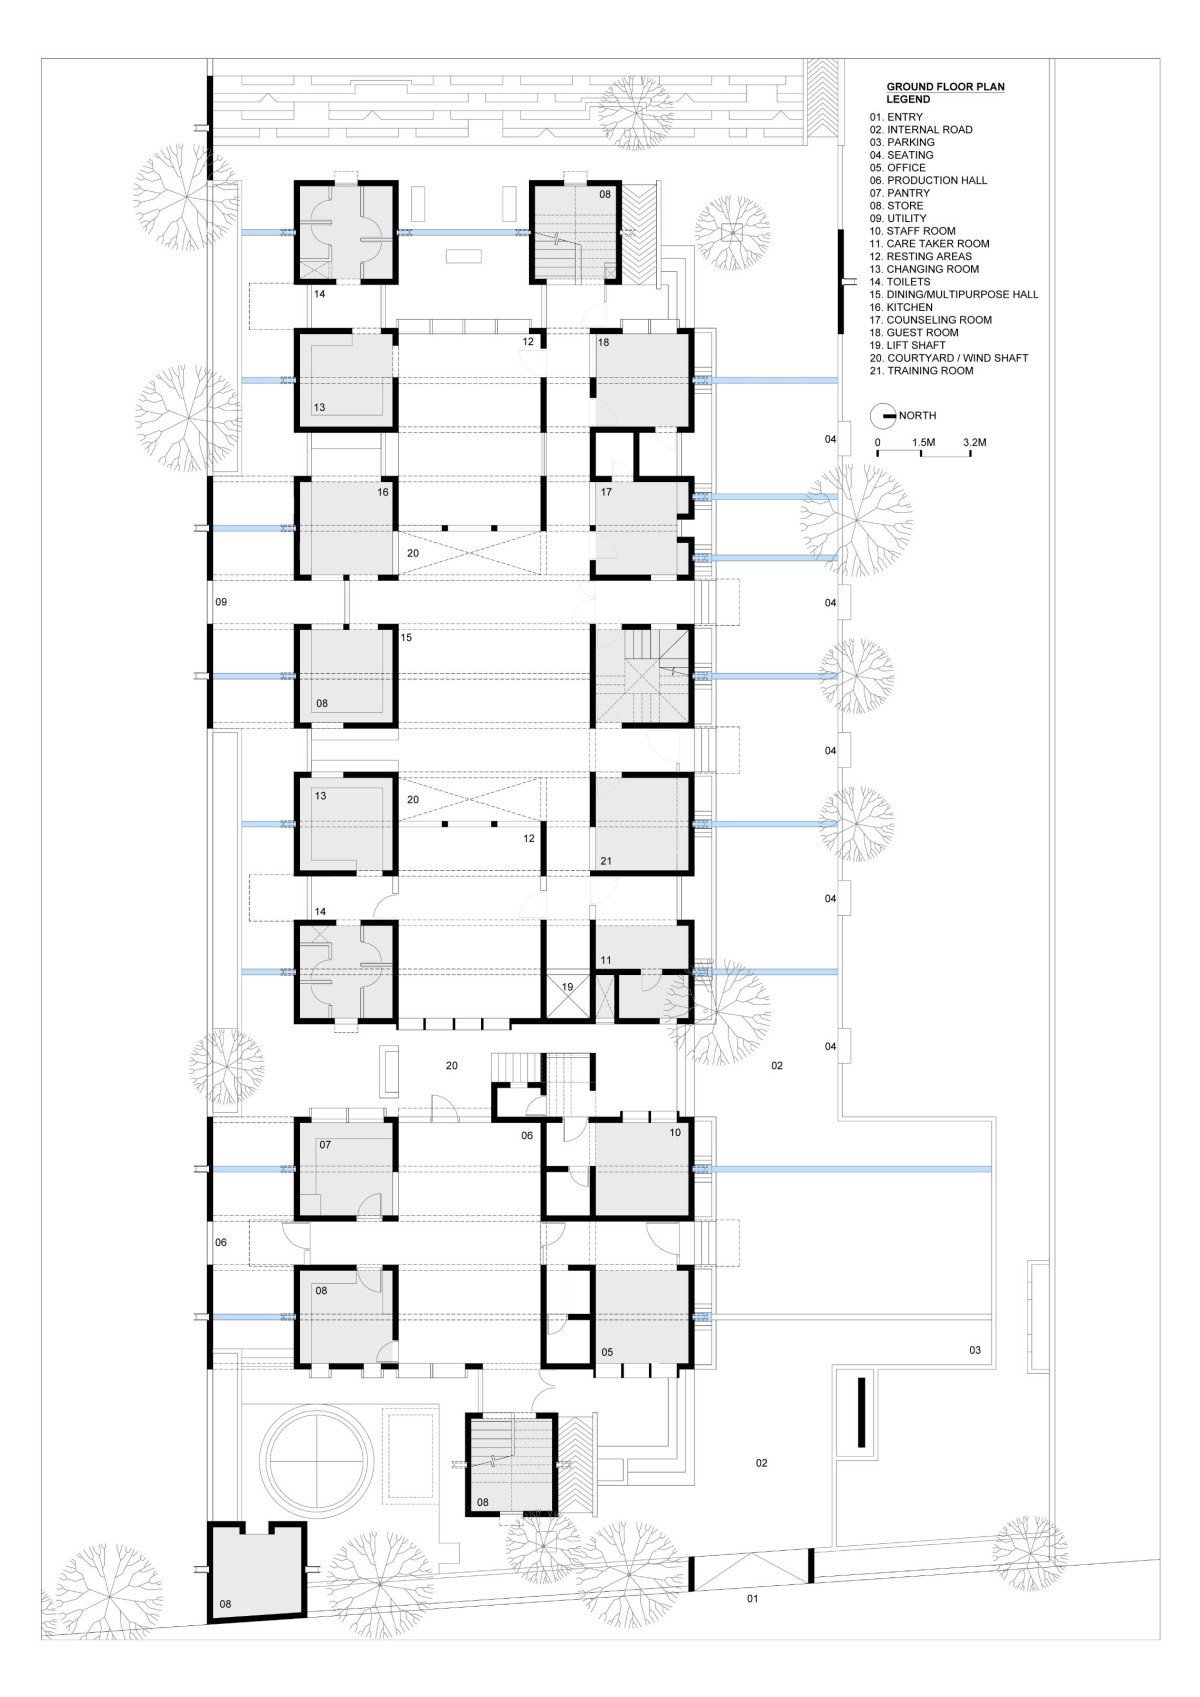 Ground Floor Plan of Women Empowerment Shelter by studioPPBA